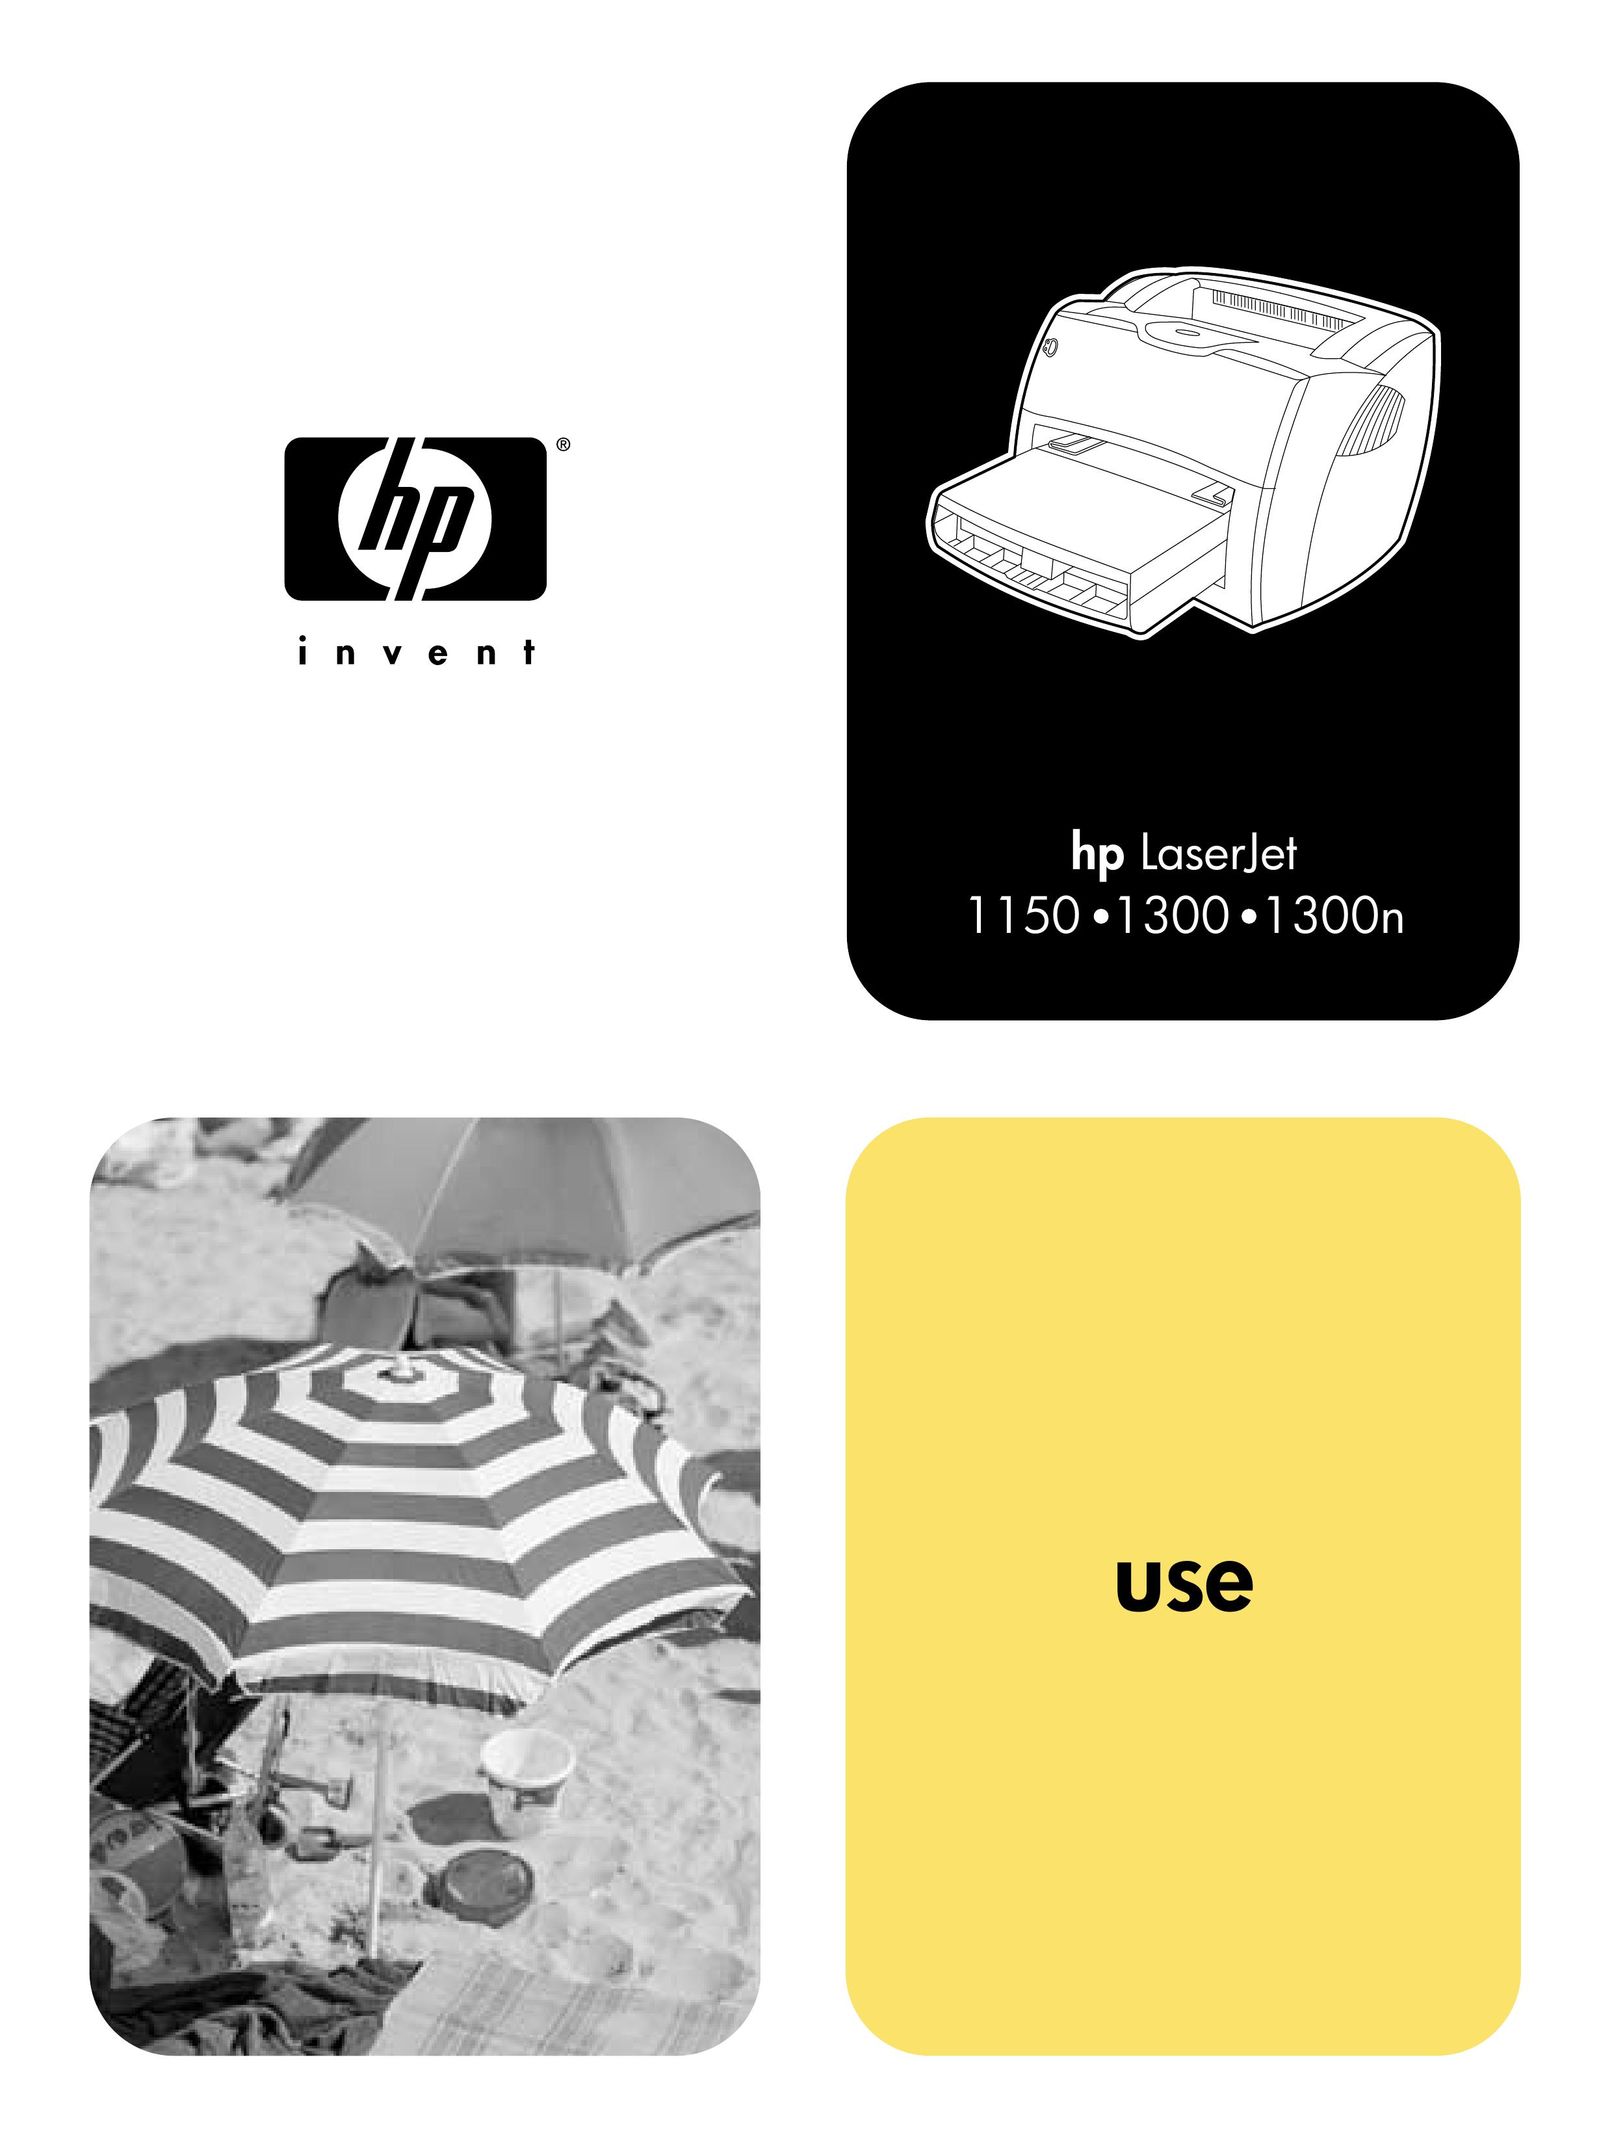 HP (Hewlett-Packard) 1150 1300 1300n Printer User Manual